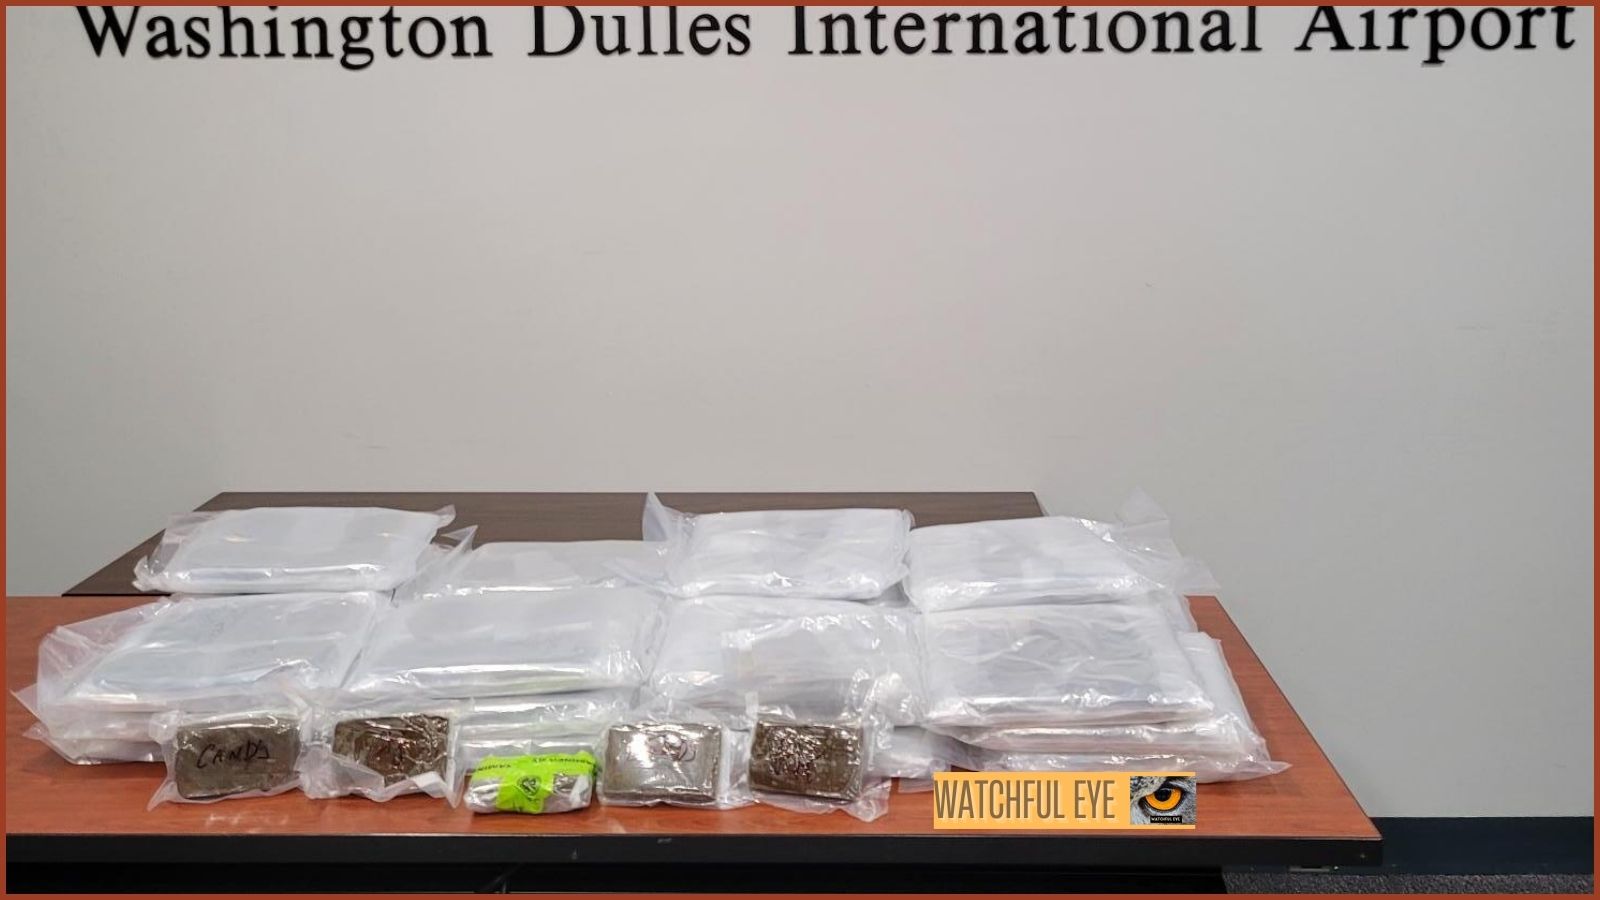 Feds snag 88 lbs. of hash at Dulles amid focus on marijuana shipments